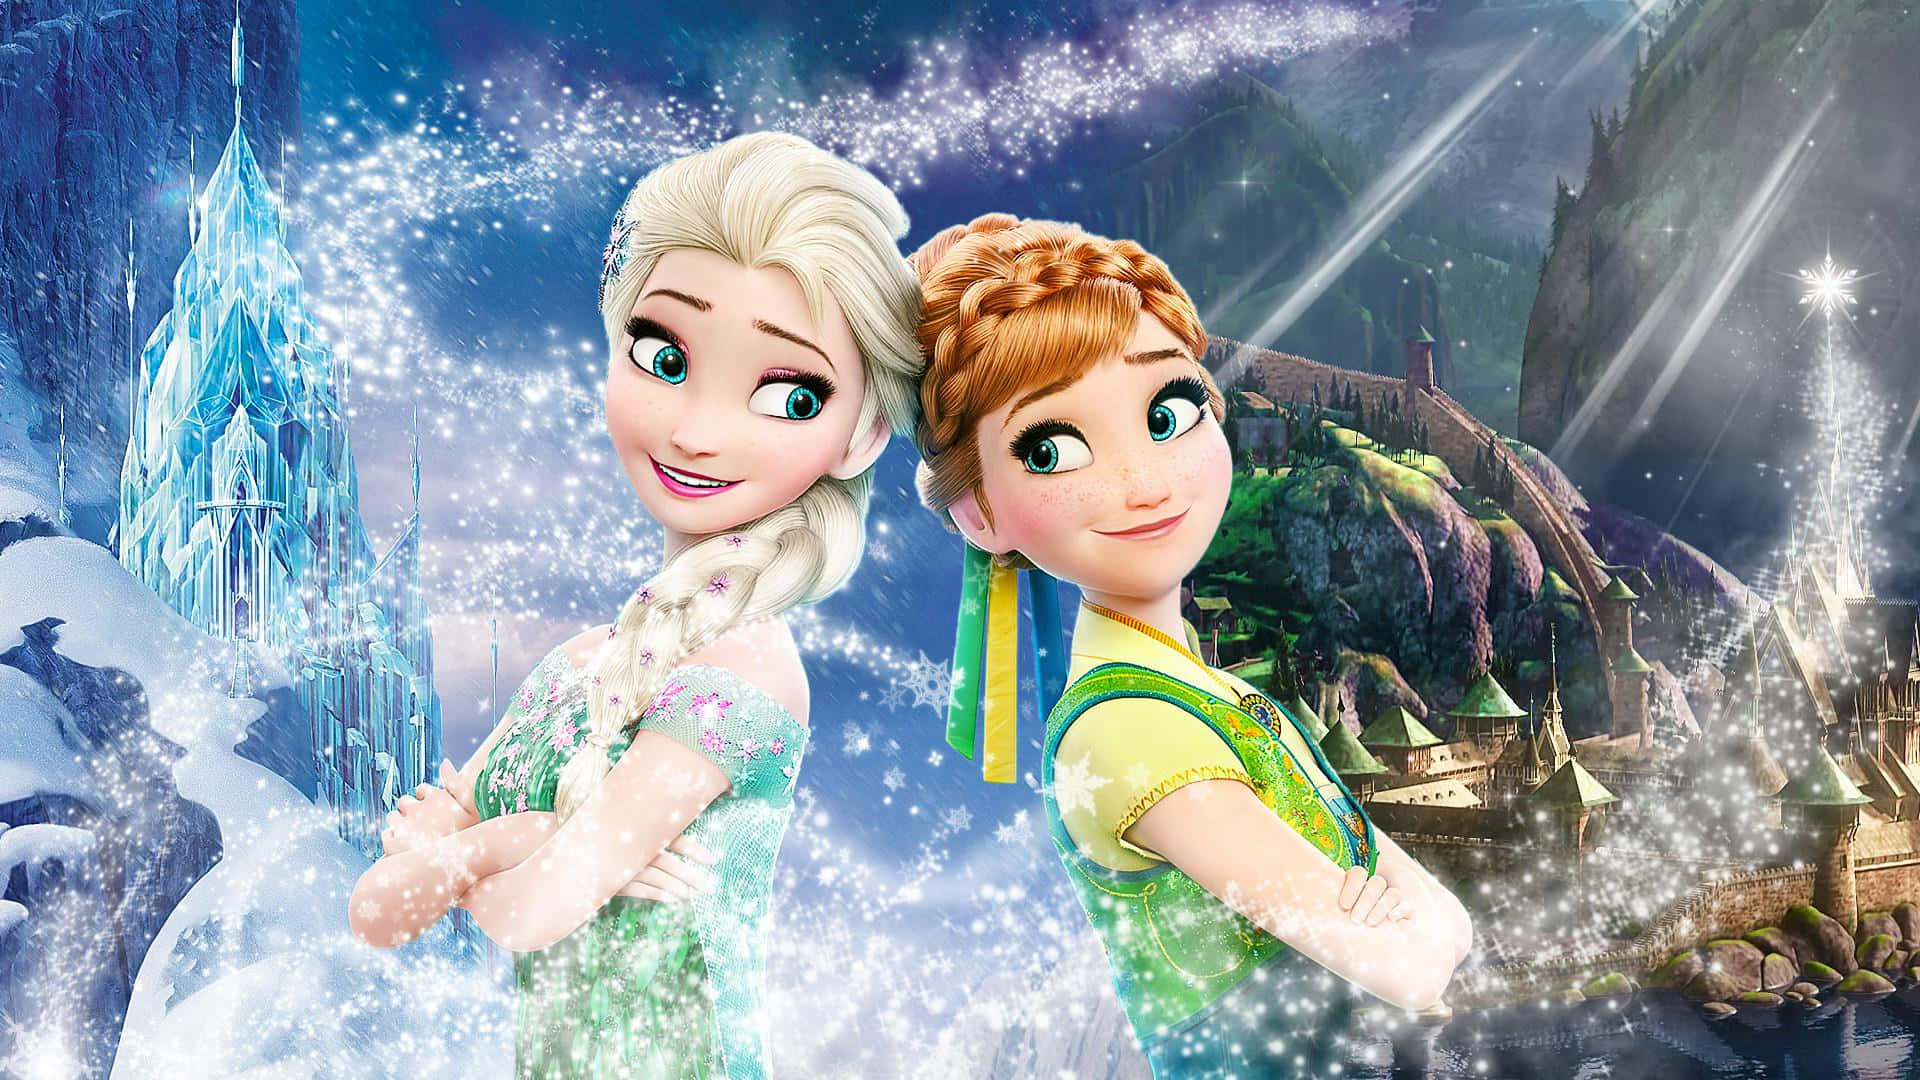 “The Powerful Bond Between Elsa&Anna”